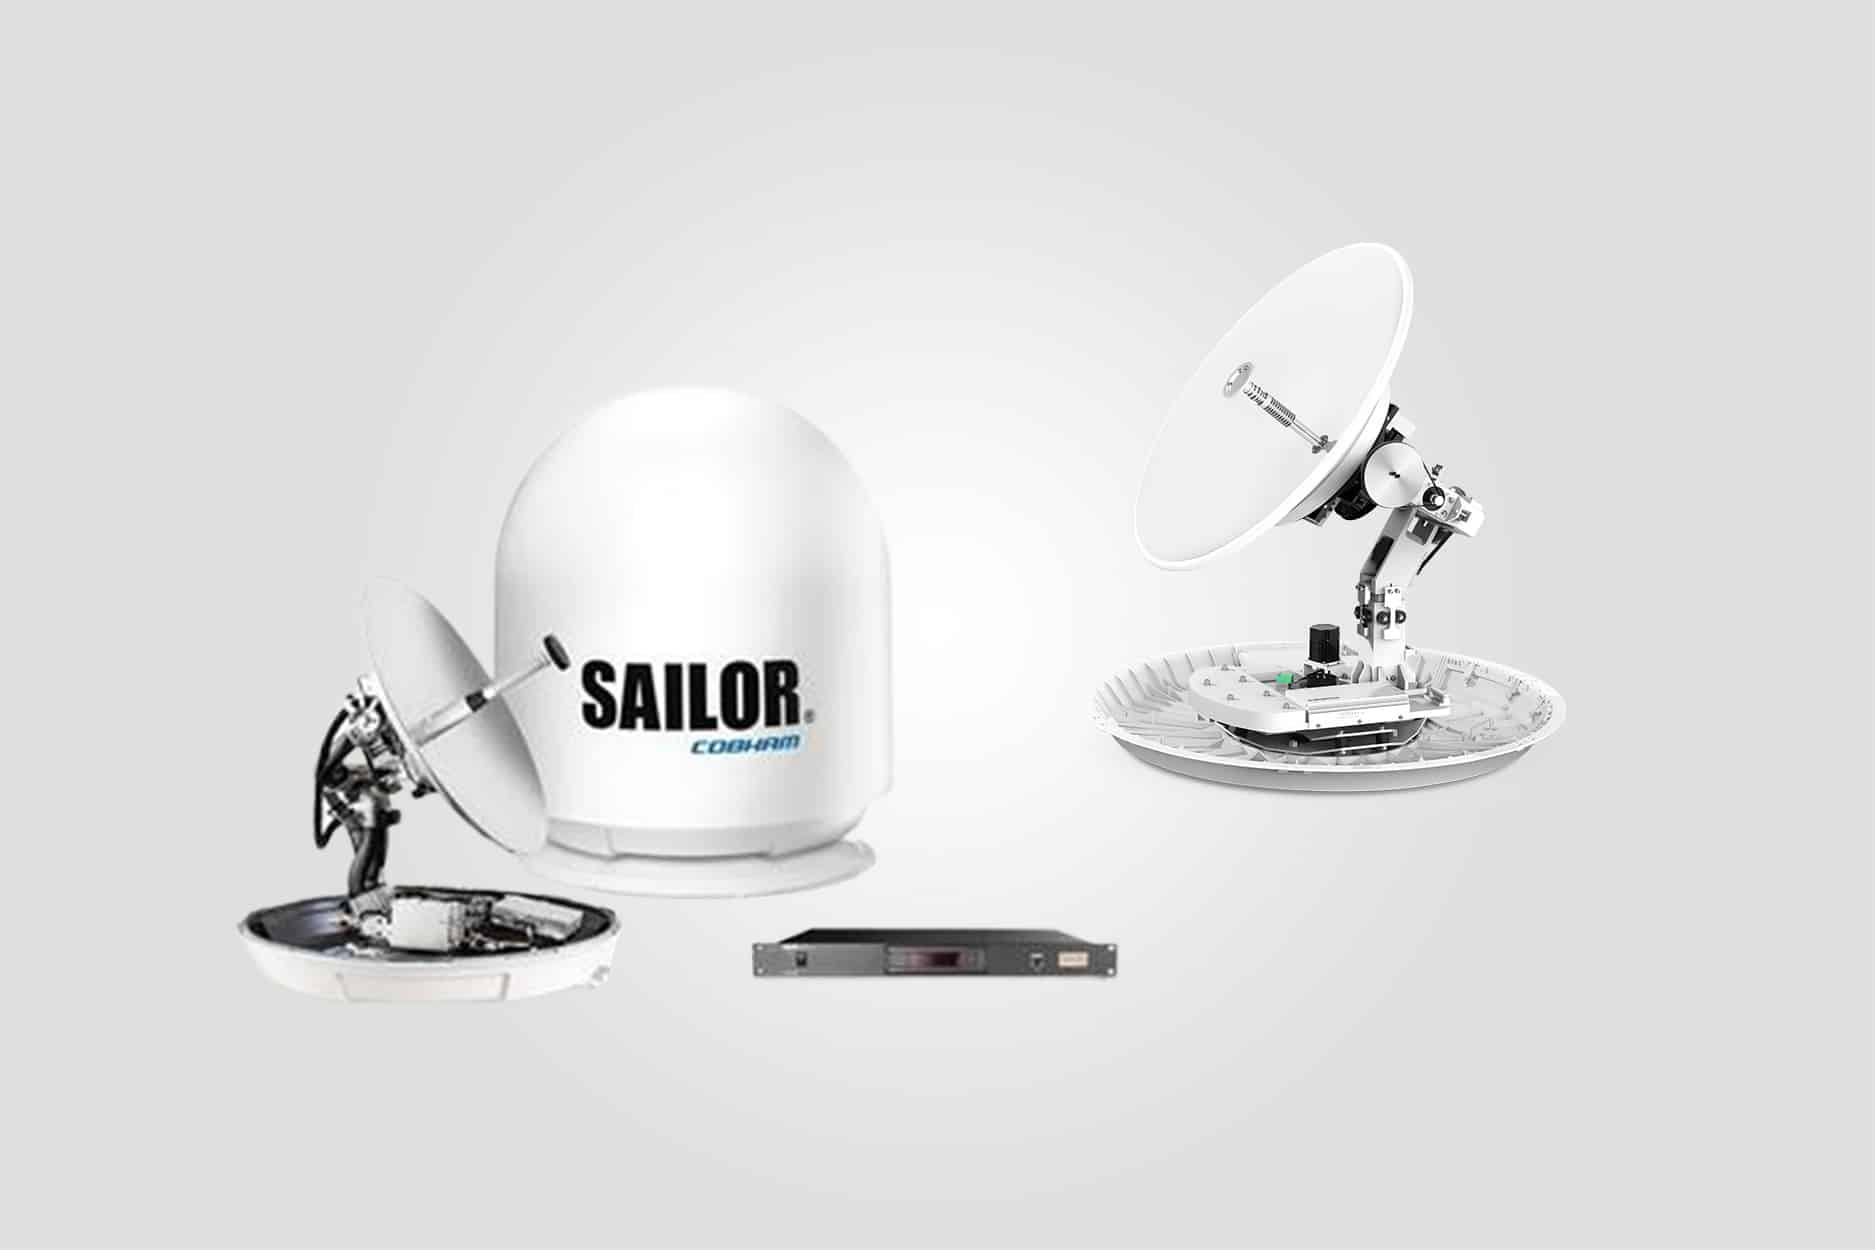 Sailor Cobham antenna image